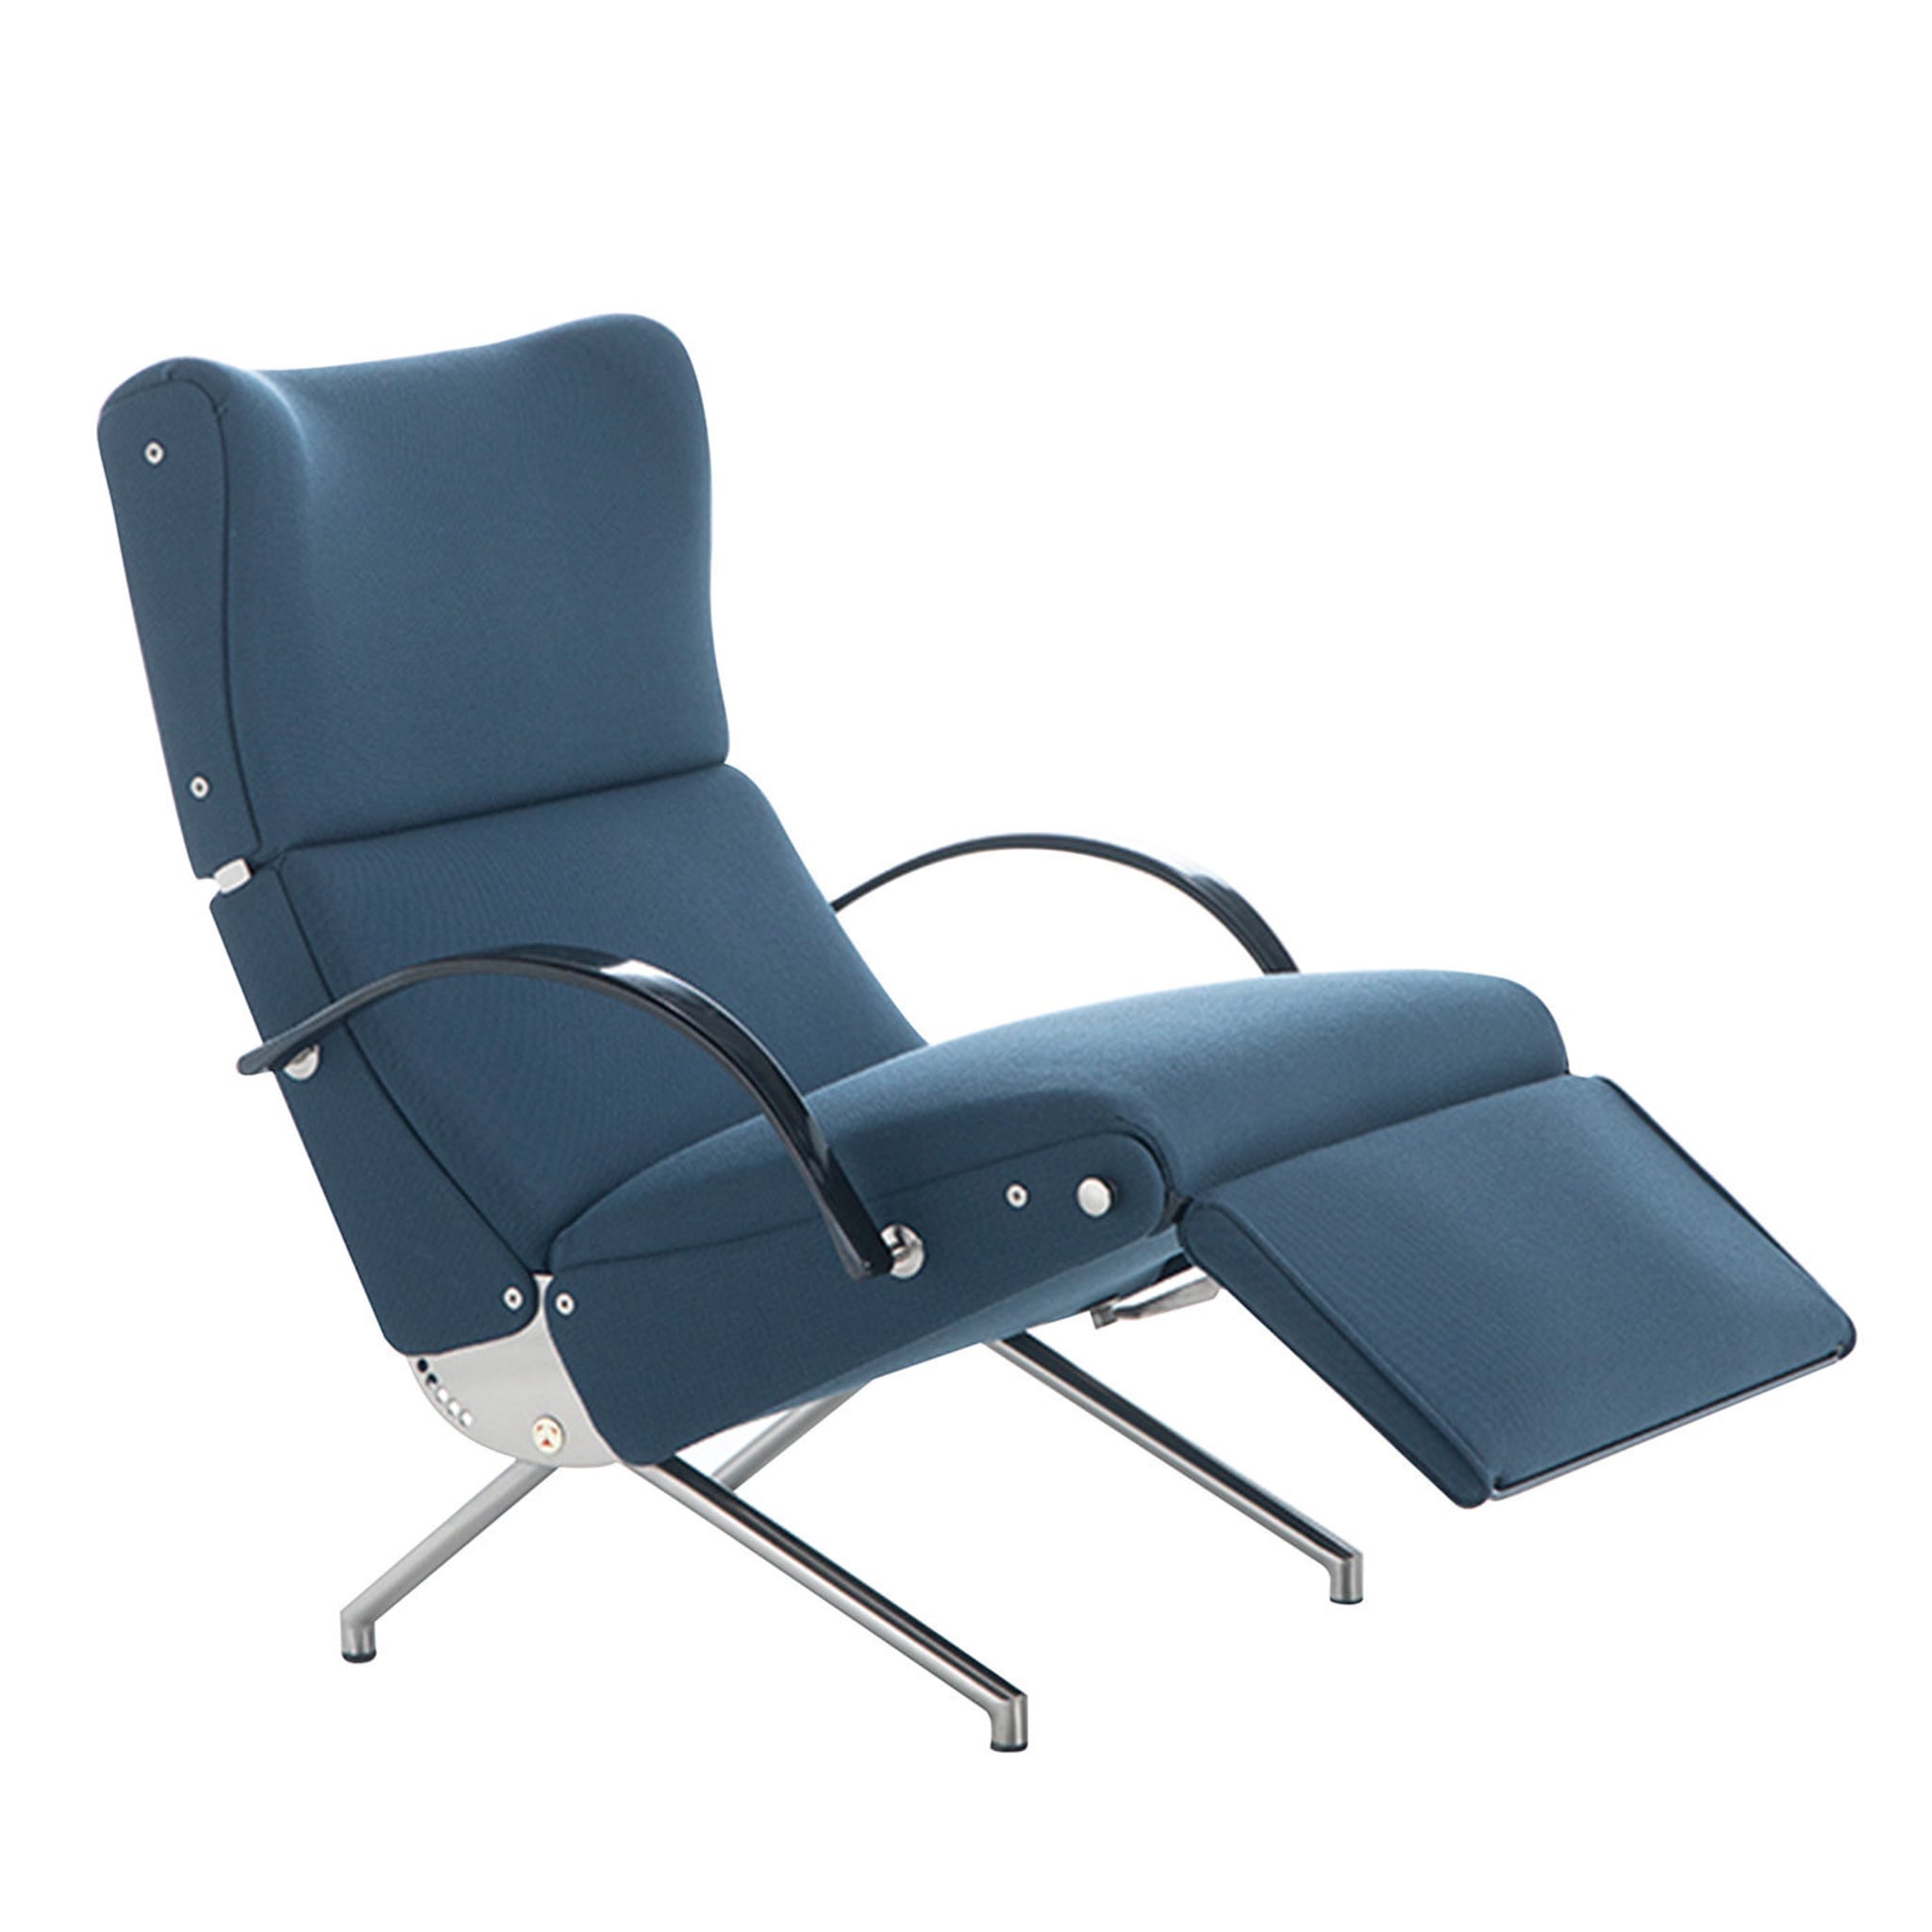 P40 Dusty Blue Lounge Chair by Osvaldo Borsani - Main view